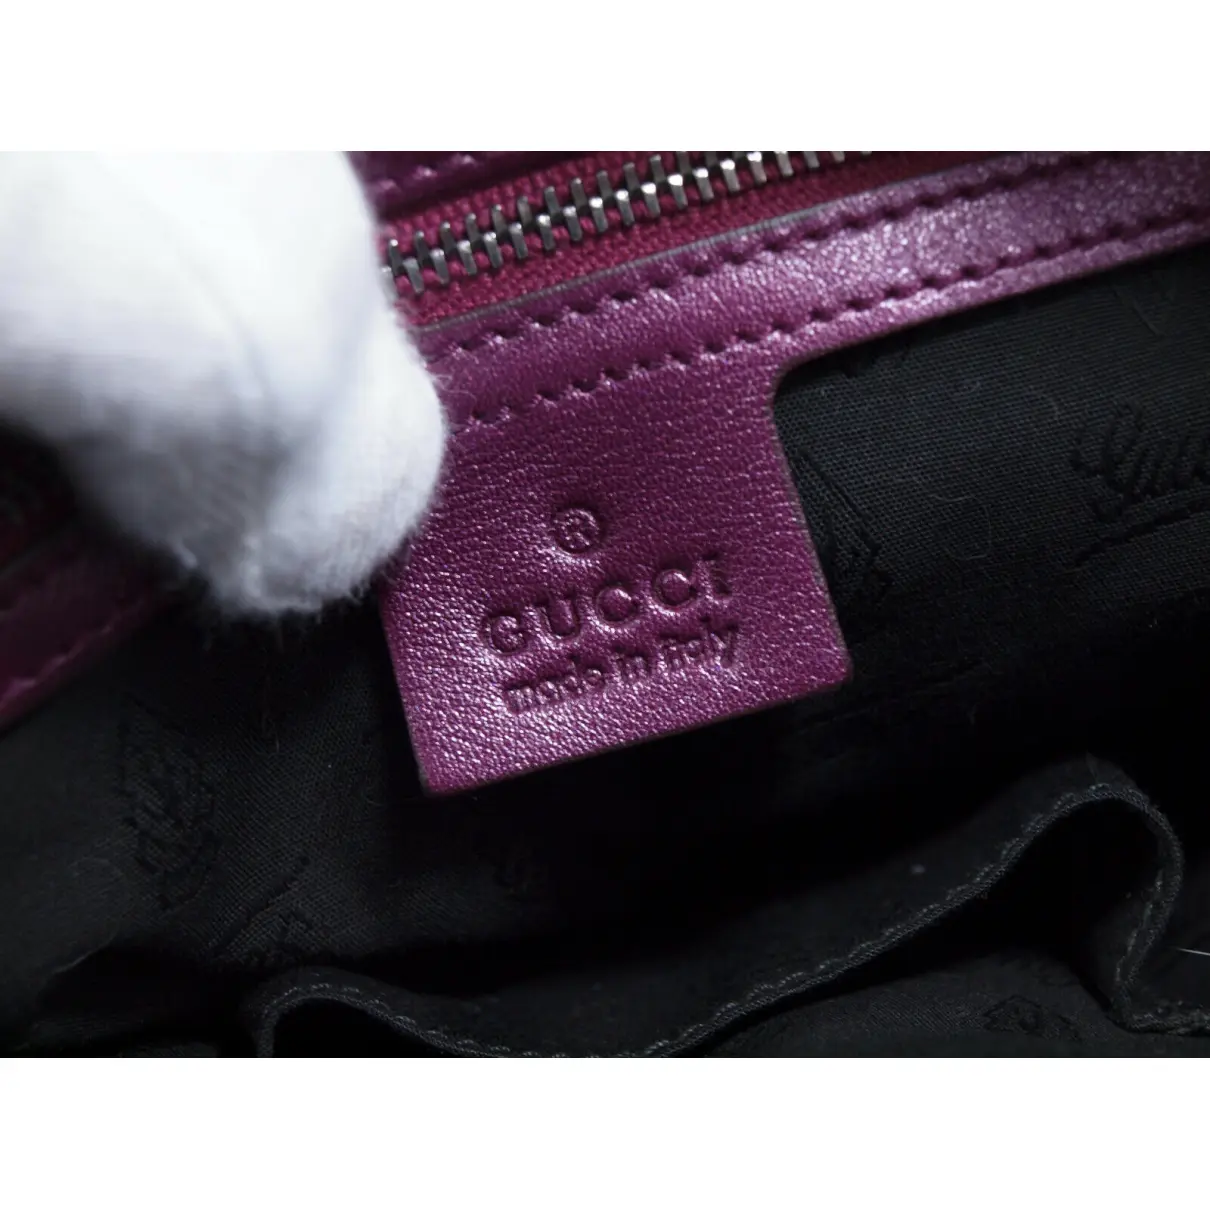 Buy Gucci Galaxy leather handbag online